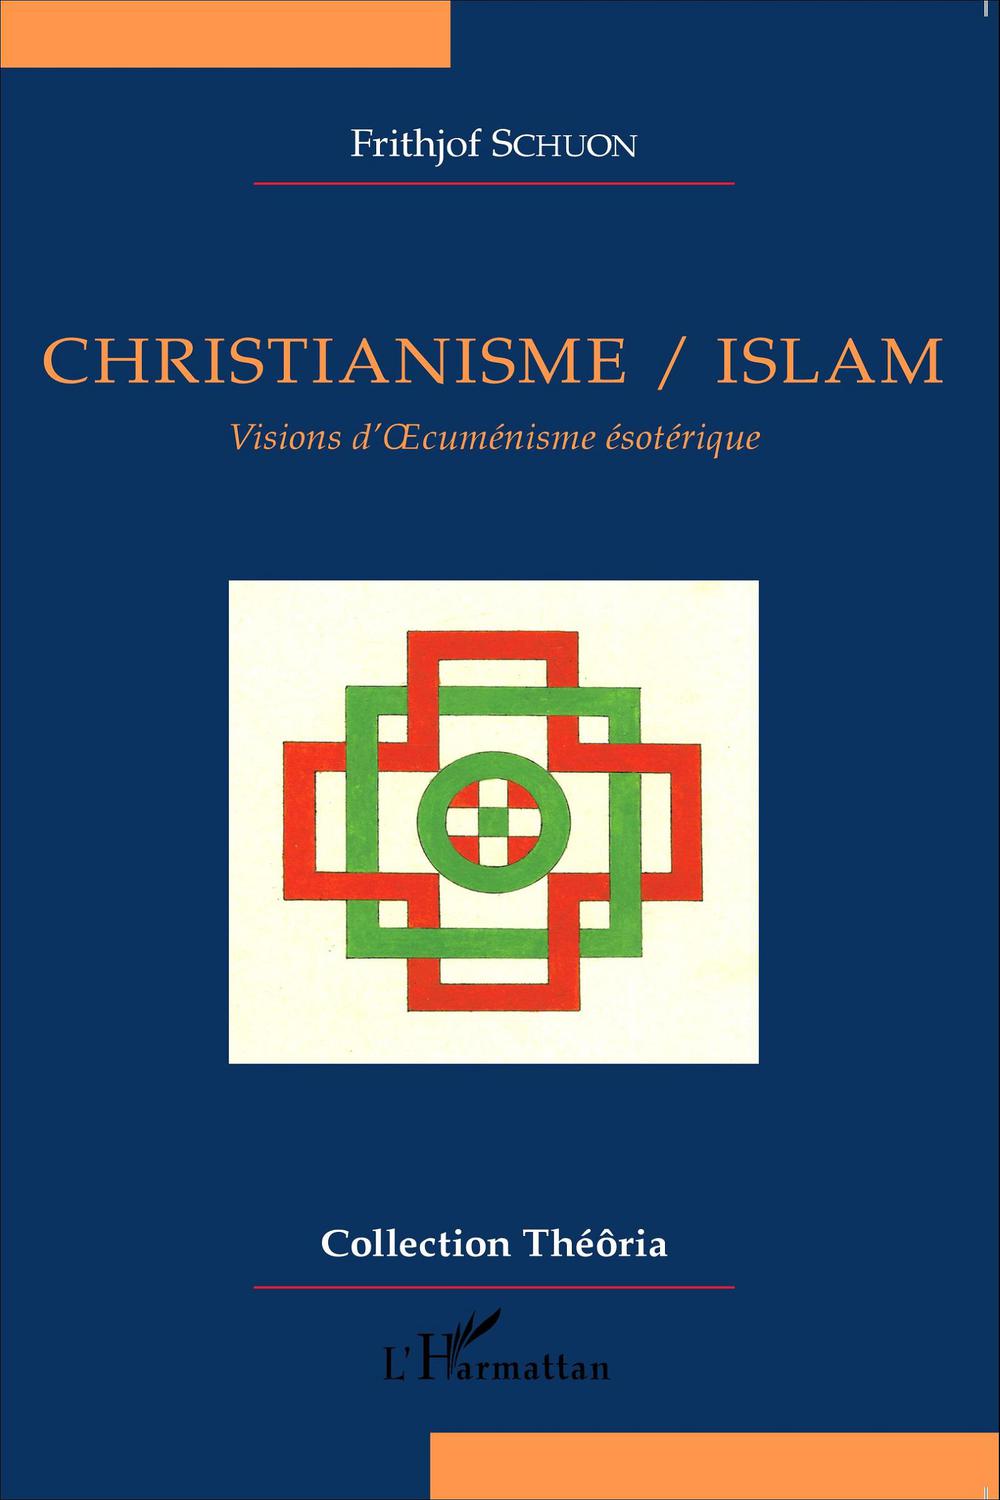 Christianisme/Islam - Frithjof Schuon